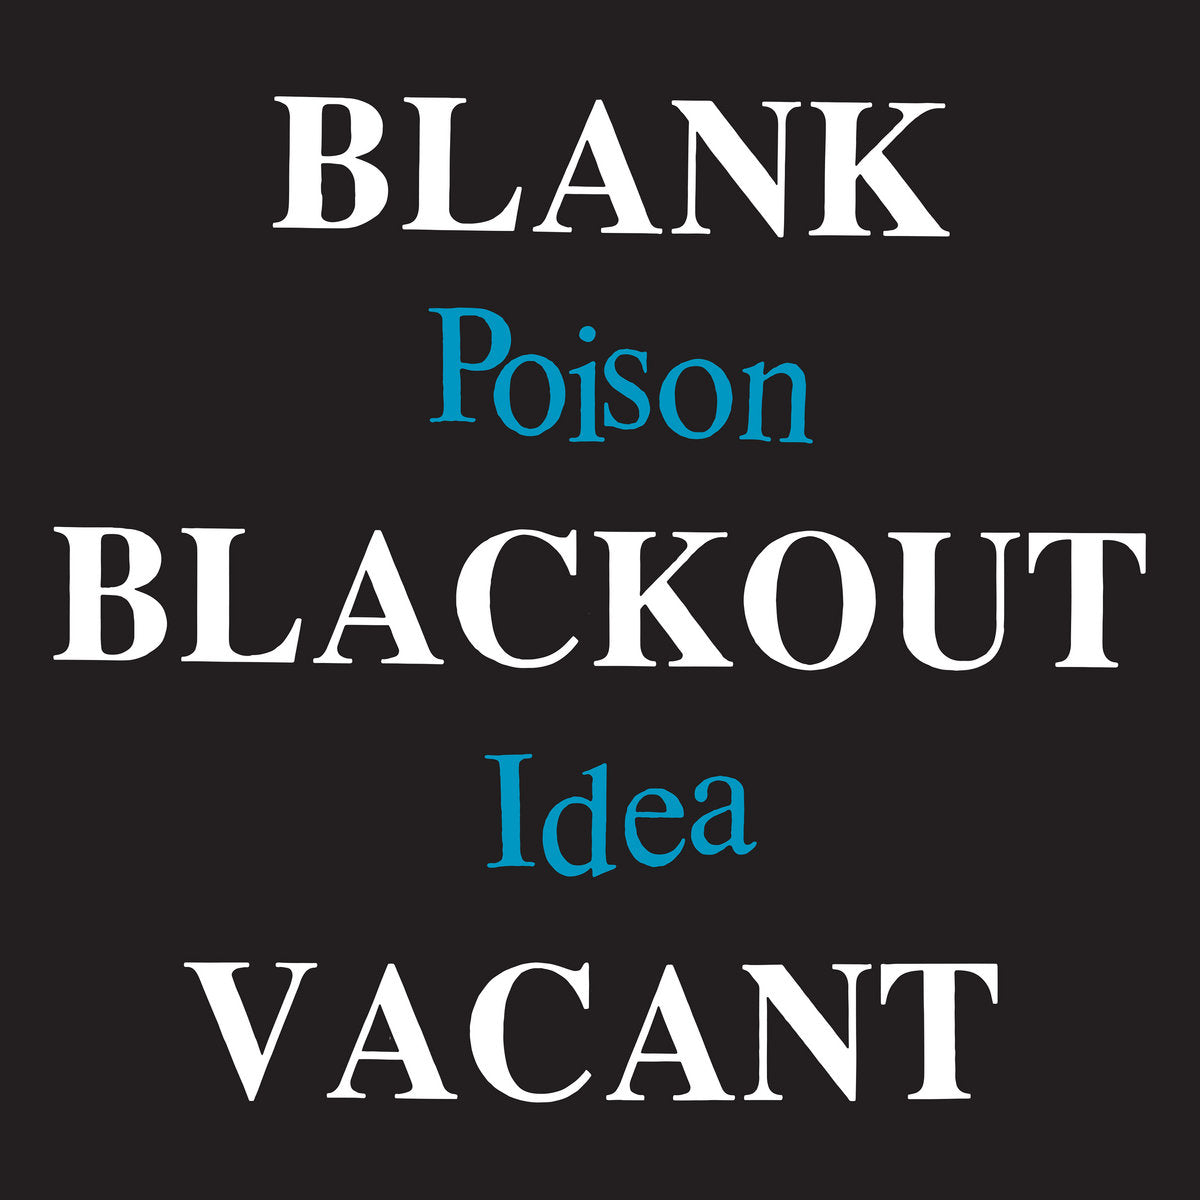 POISON IDEA 'Blank Blackout Vacant' 2xLP / Deluxe Reissue